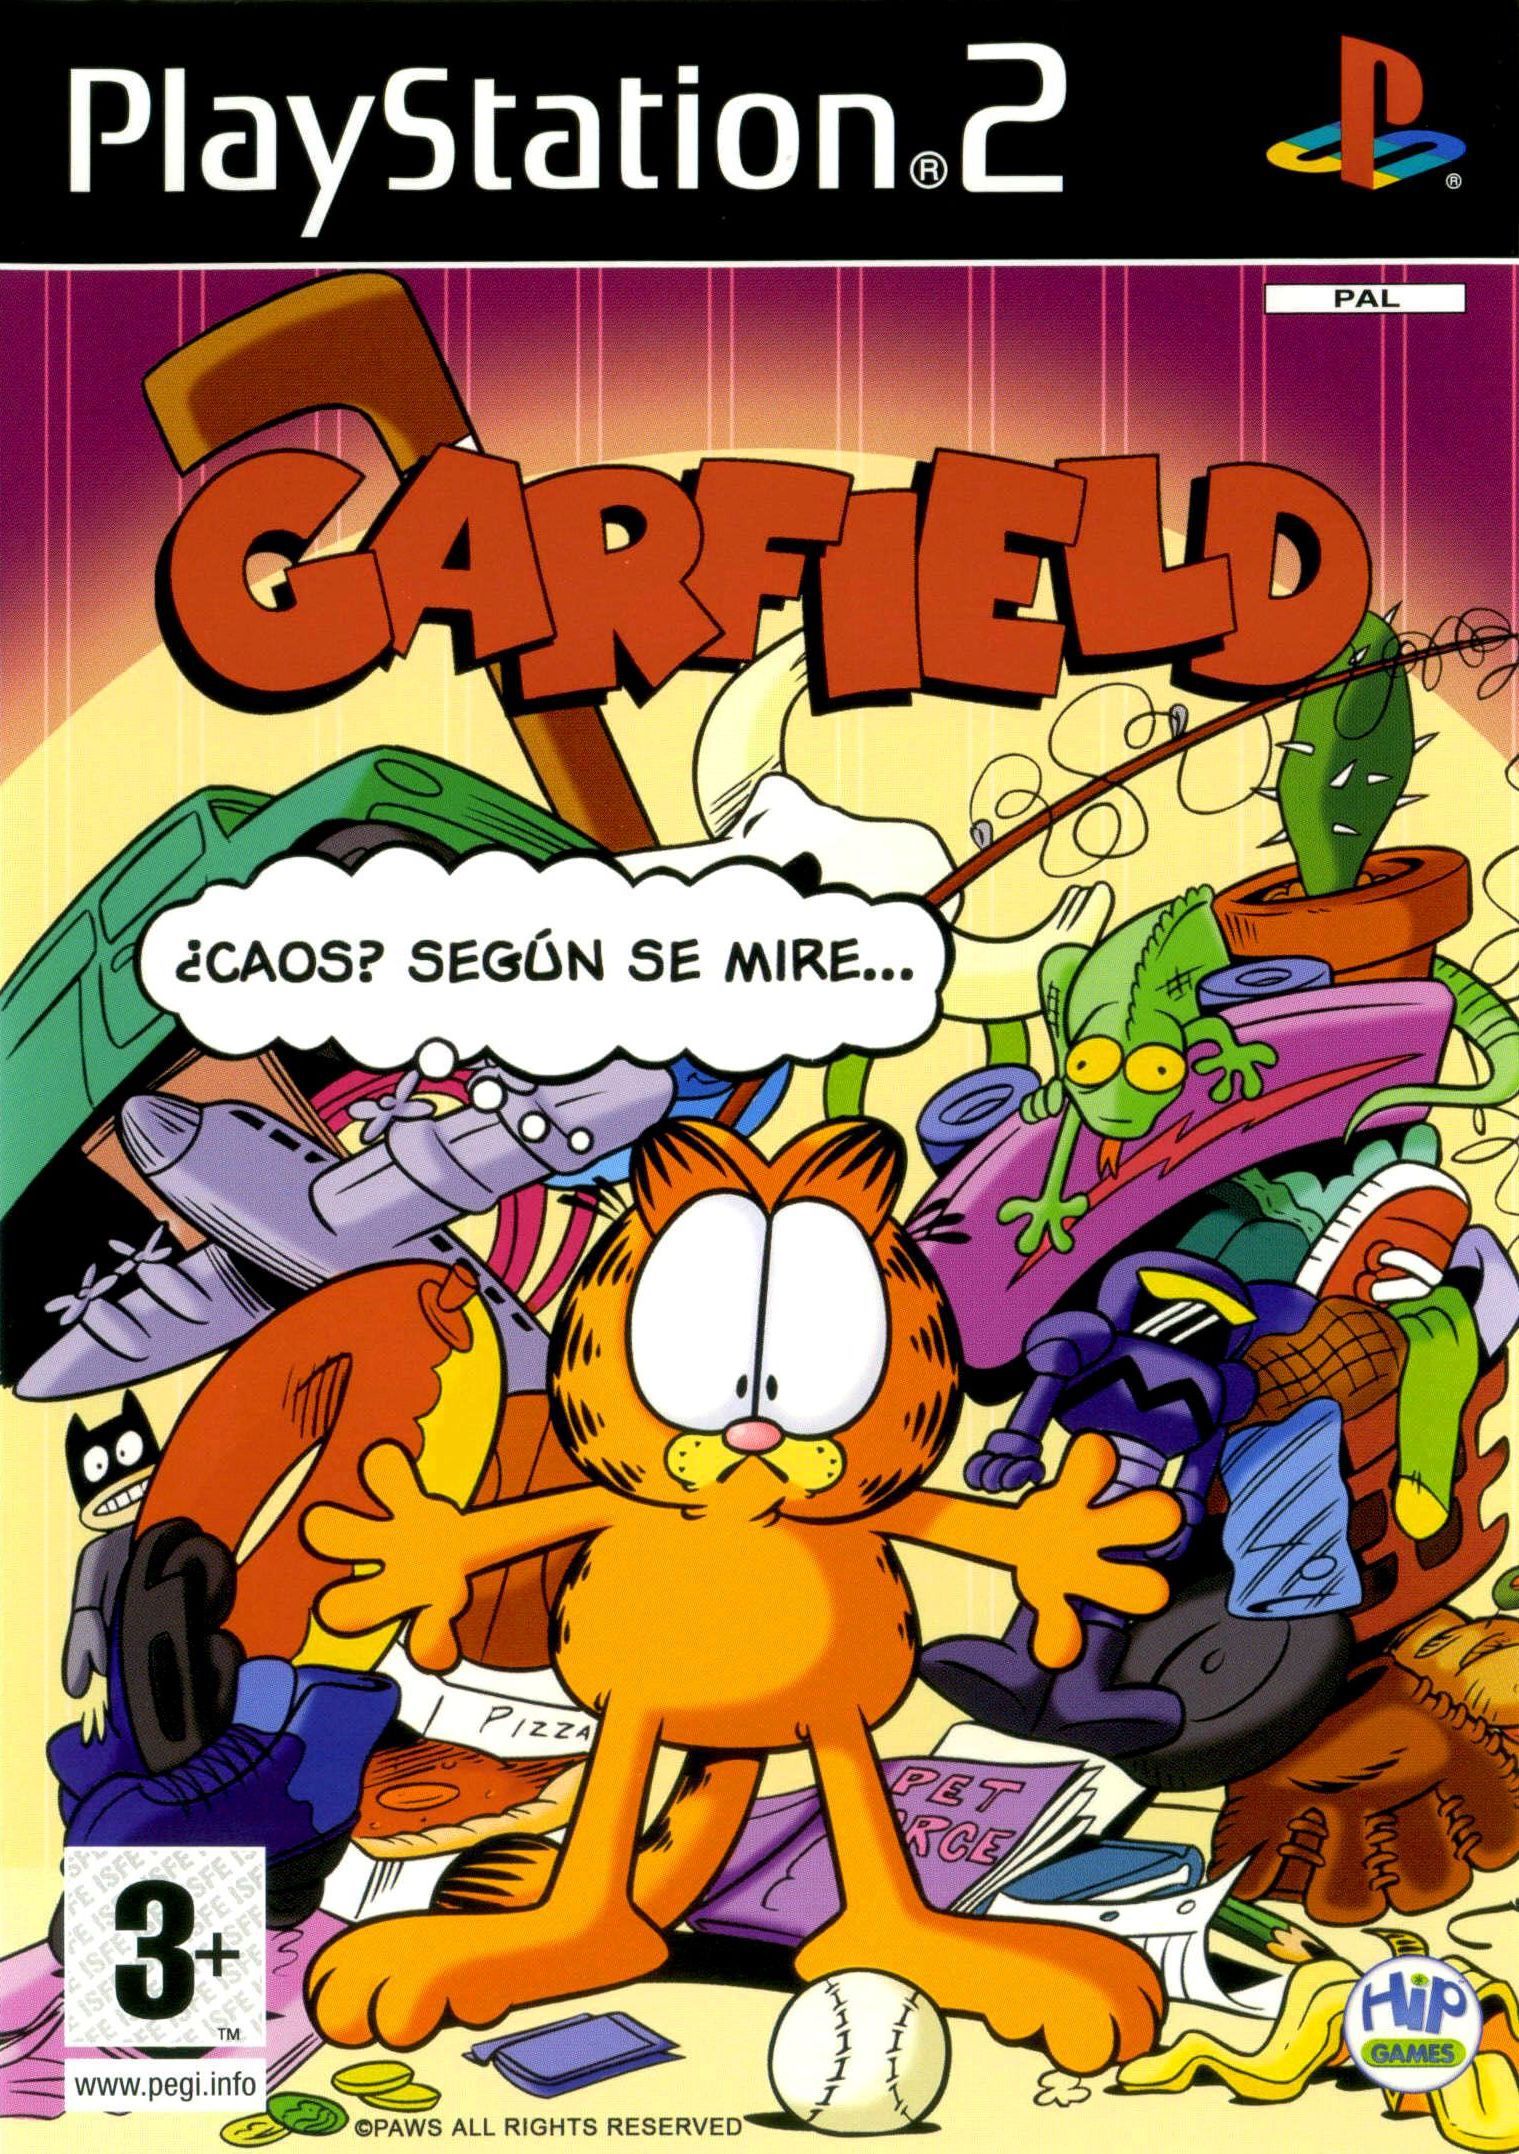 Гарфилд пк. Garfield 2 ps2. Гарфилд ps2. Garfield игра 2004 2. Garfield 2004 ps2.